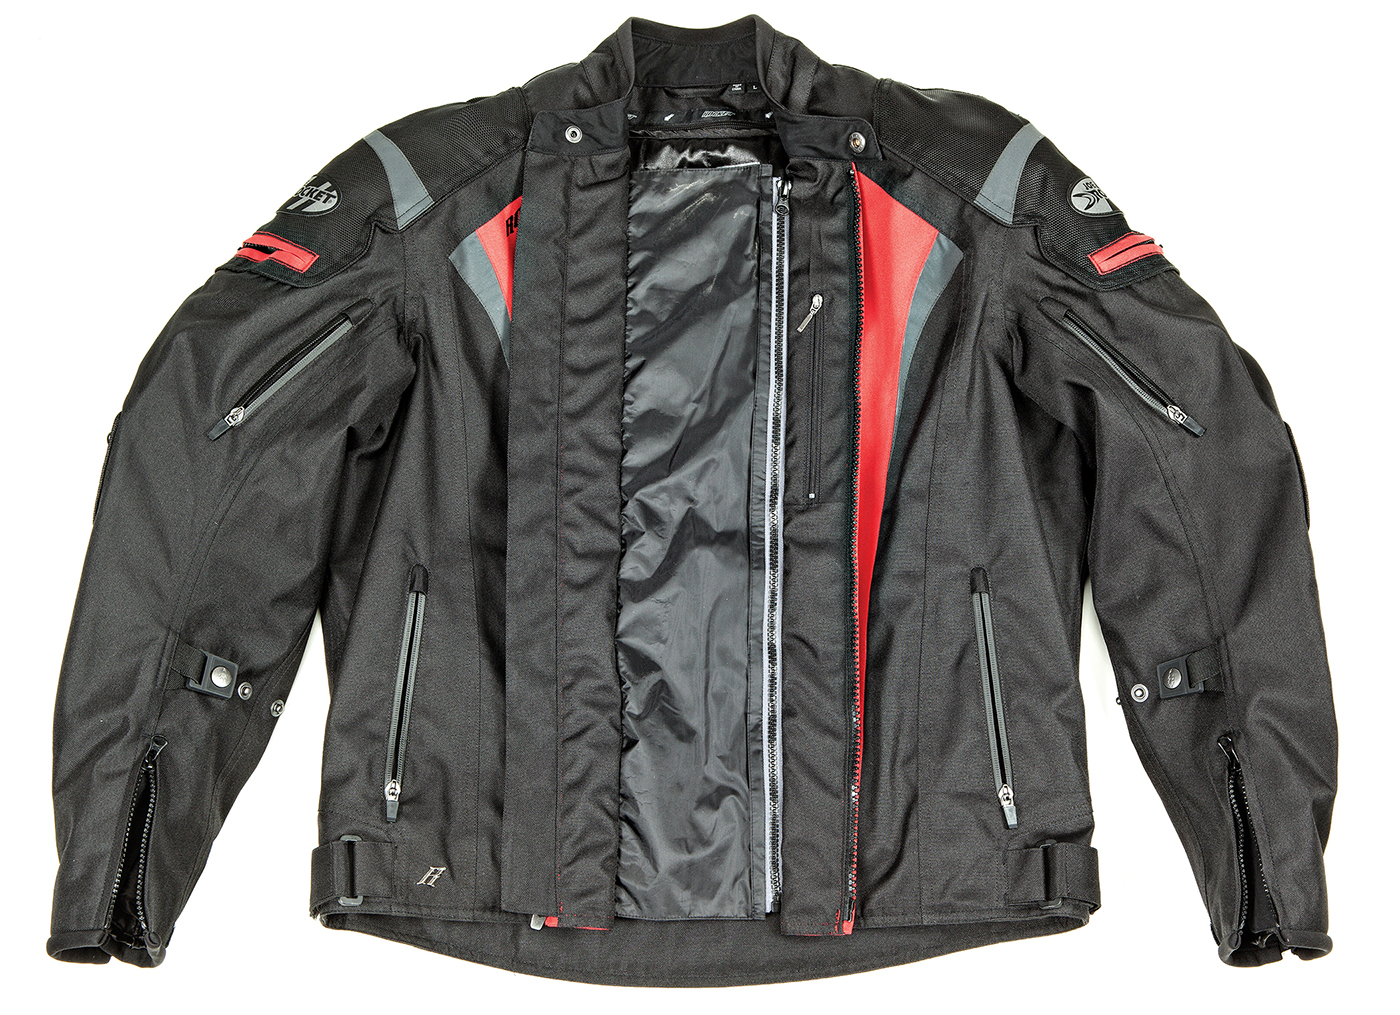 Joe Rocket Atomic 5.0 Men's Black Textile Jacket with CE Armor X-Large - image 6 of 7